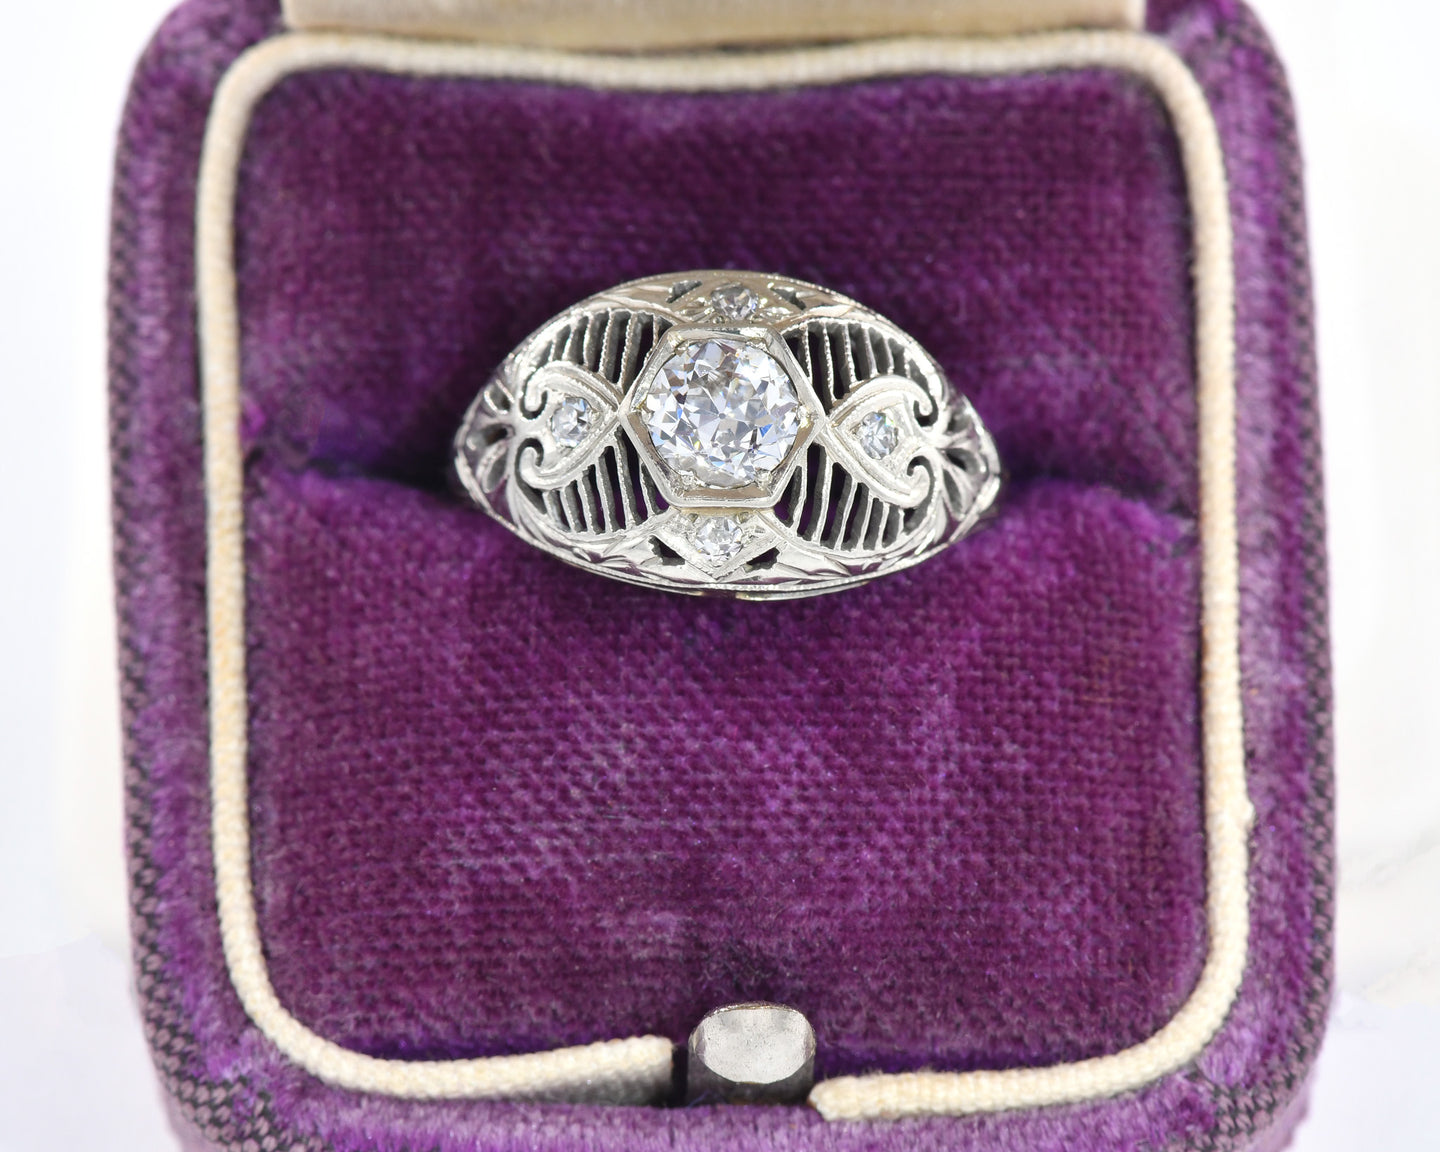 Antique 18k white gold filigree and diamond ring.